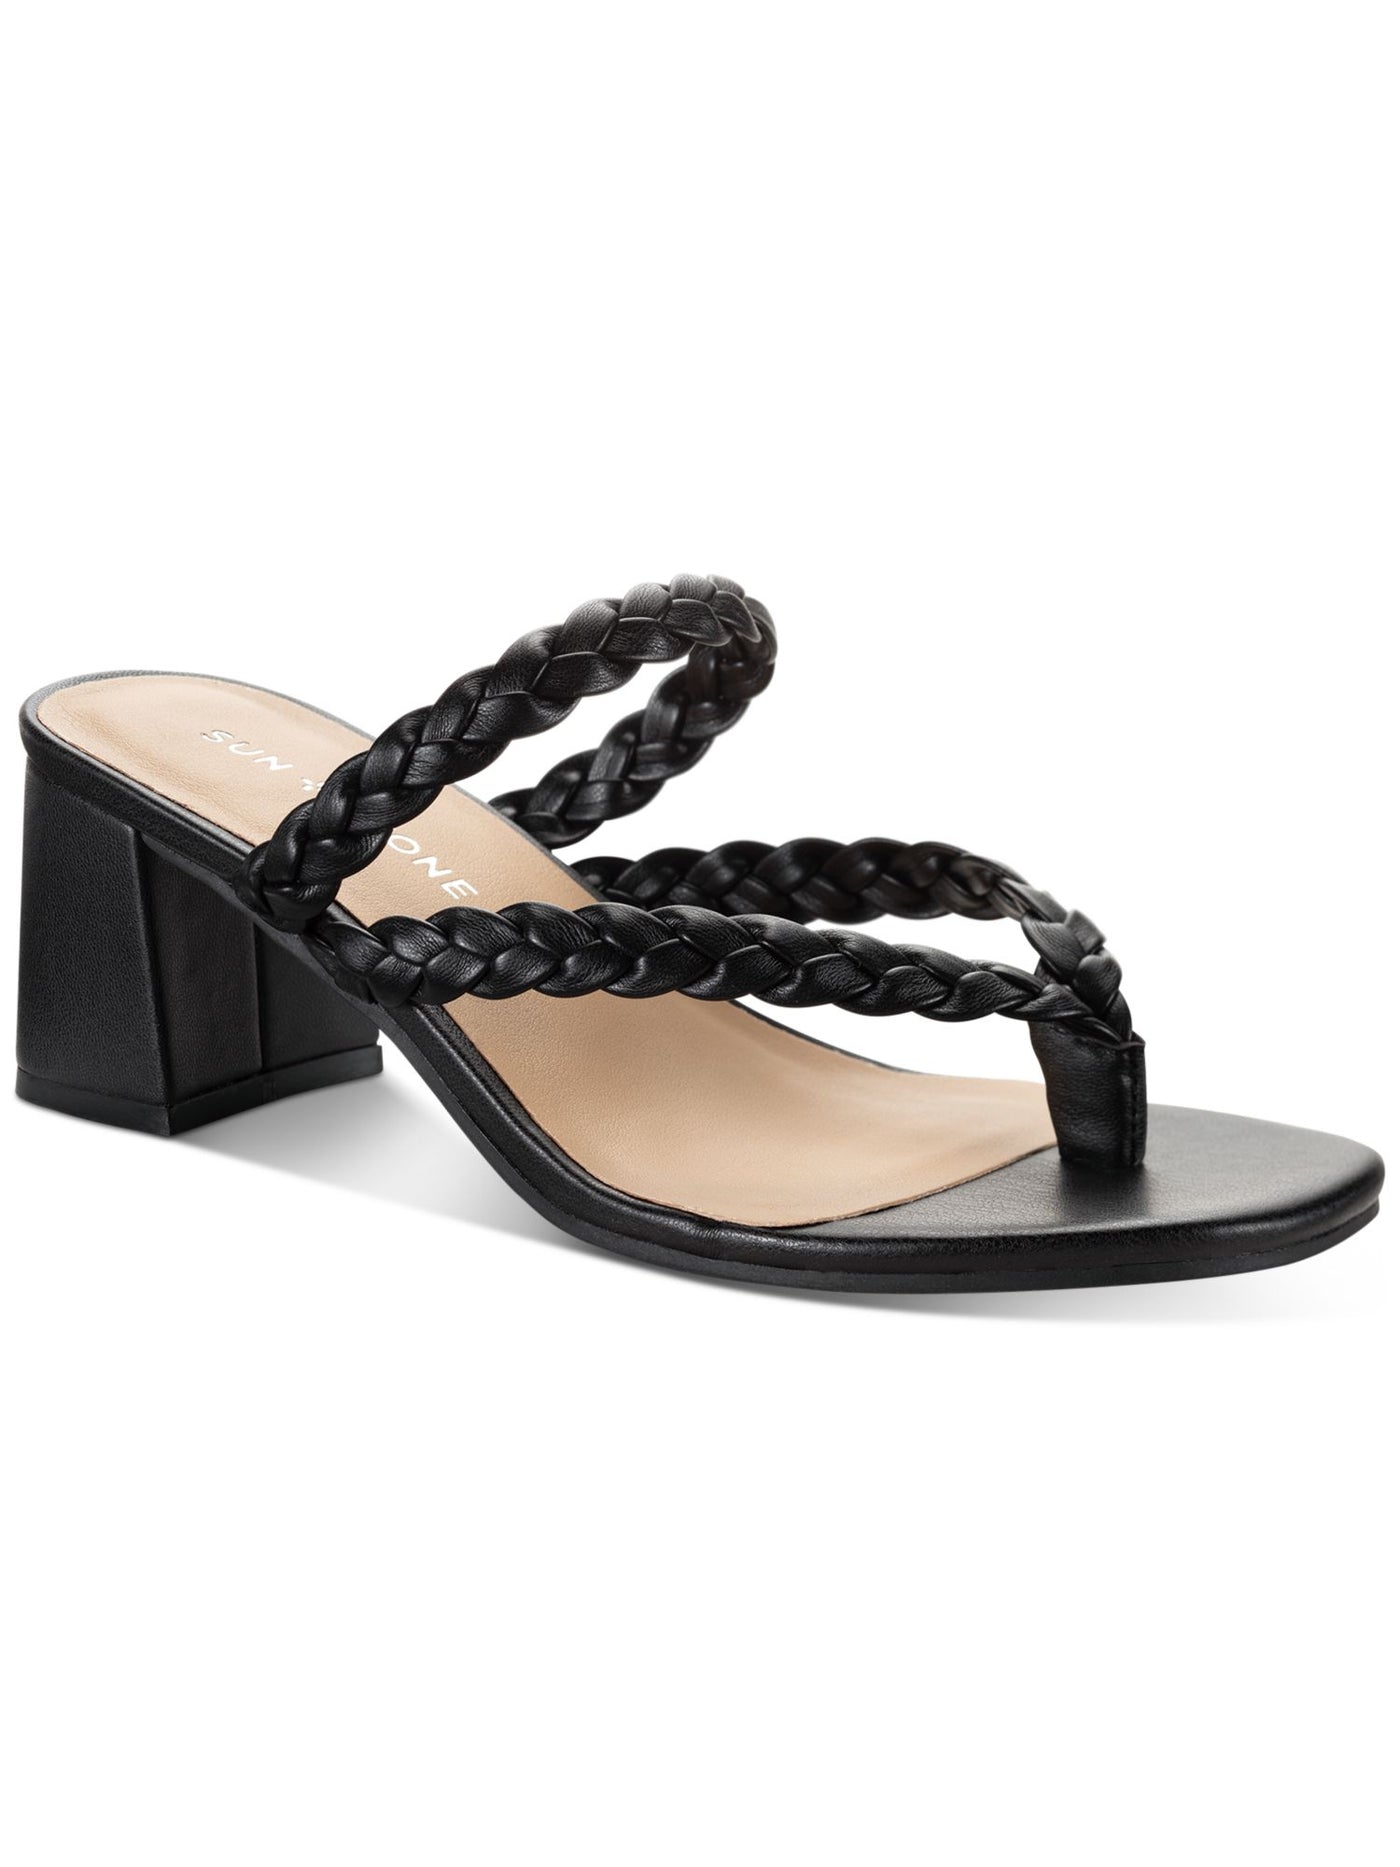 SUN STONE Womens Black Thong Braided Padded Wiinnie Round Toe Block Heel Slip On Dress Sandals Shoes 9.5 M